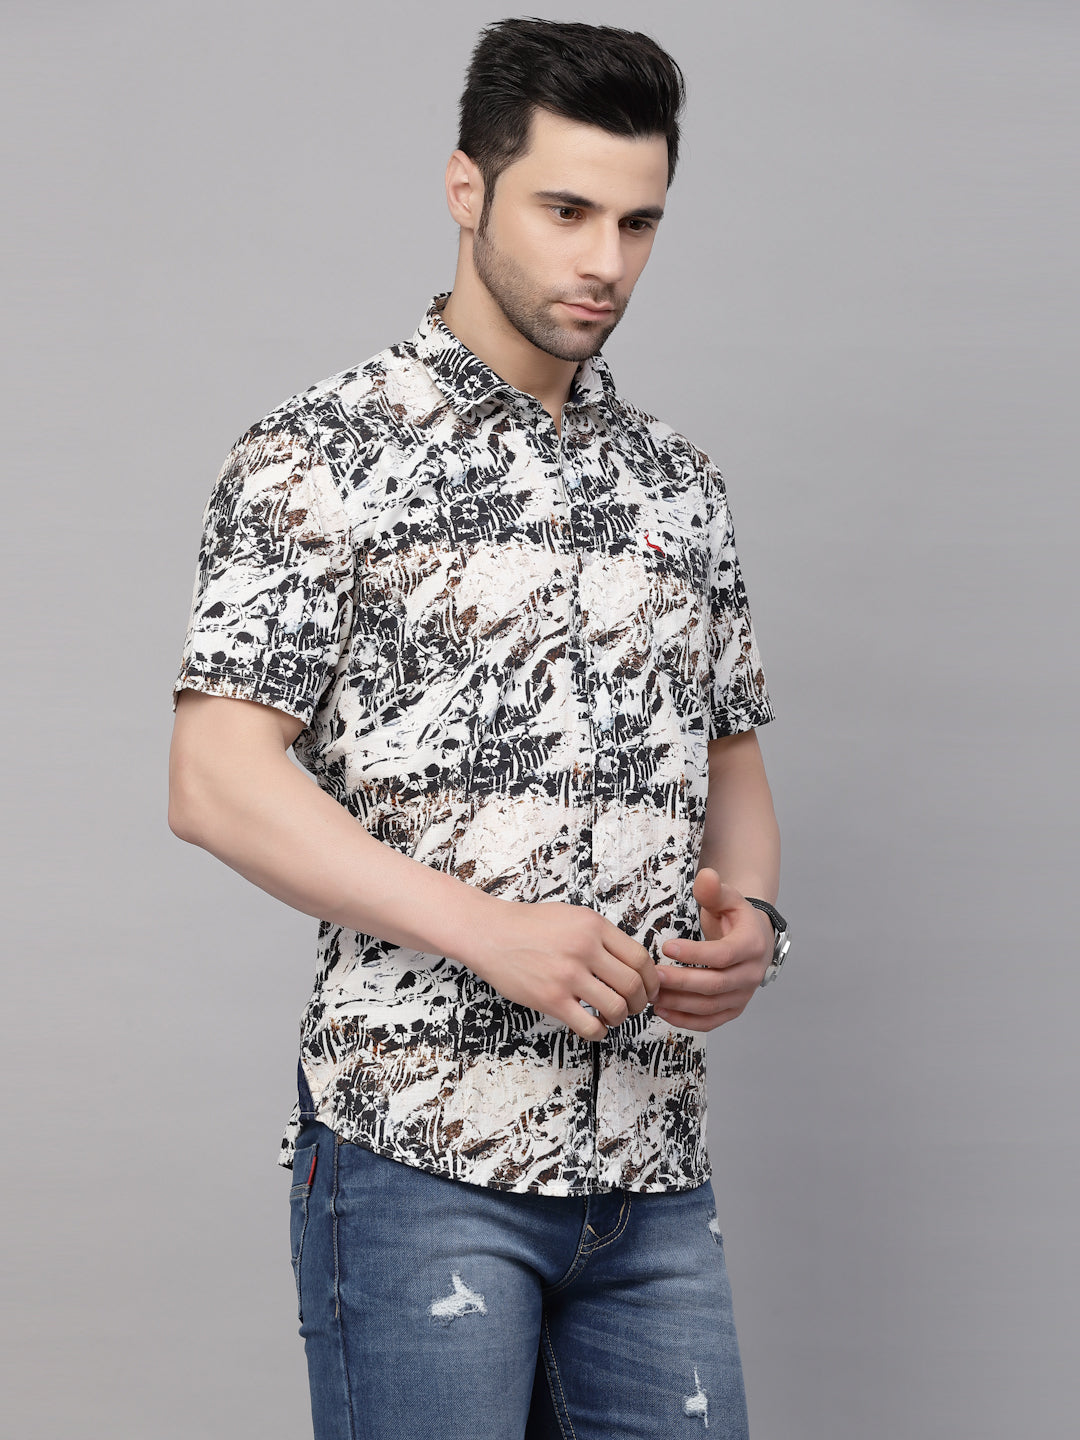 Valbone Men’s Black Digital Print Regular Fit Casual Shirt Half Sleeves